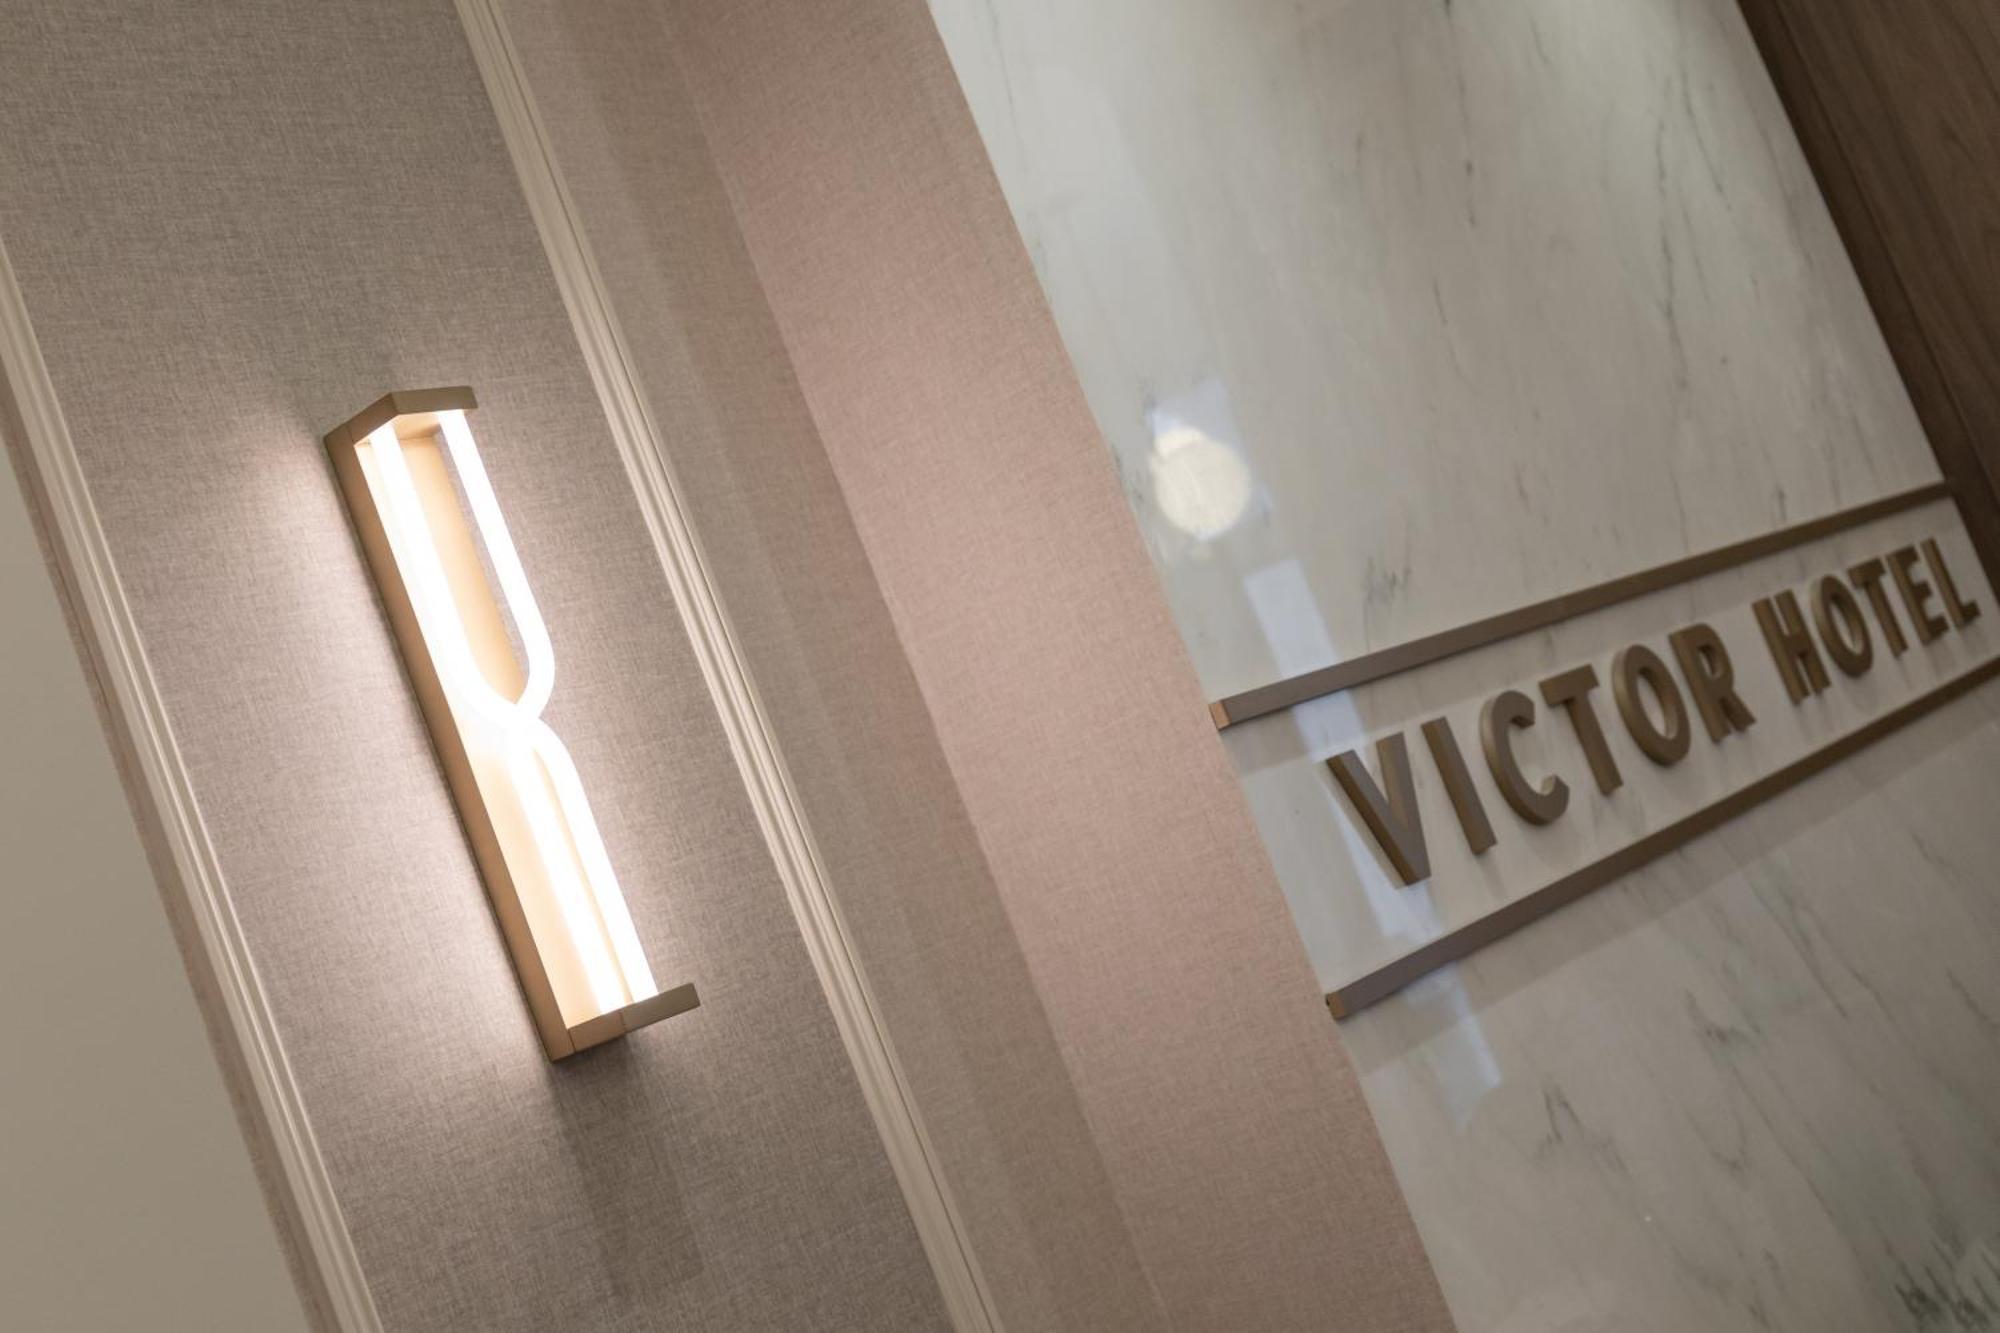 Mornington Victor Hotel London Belgravia Extérieur photo